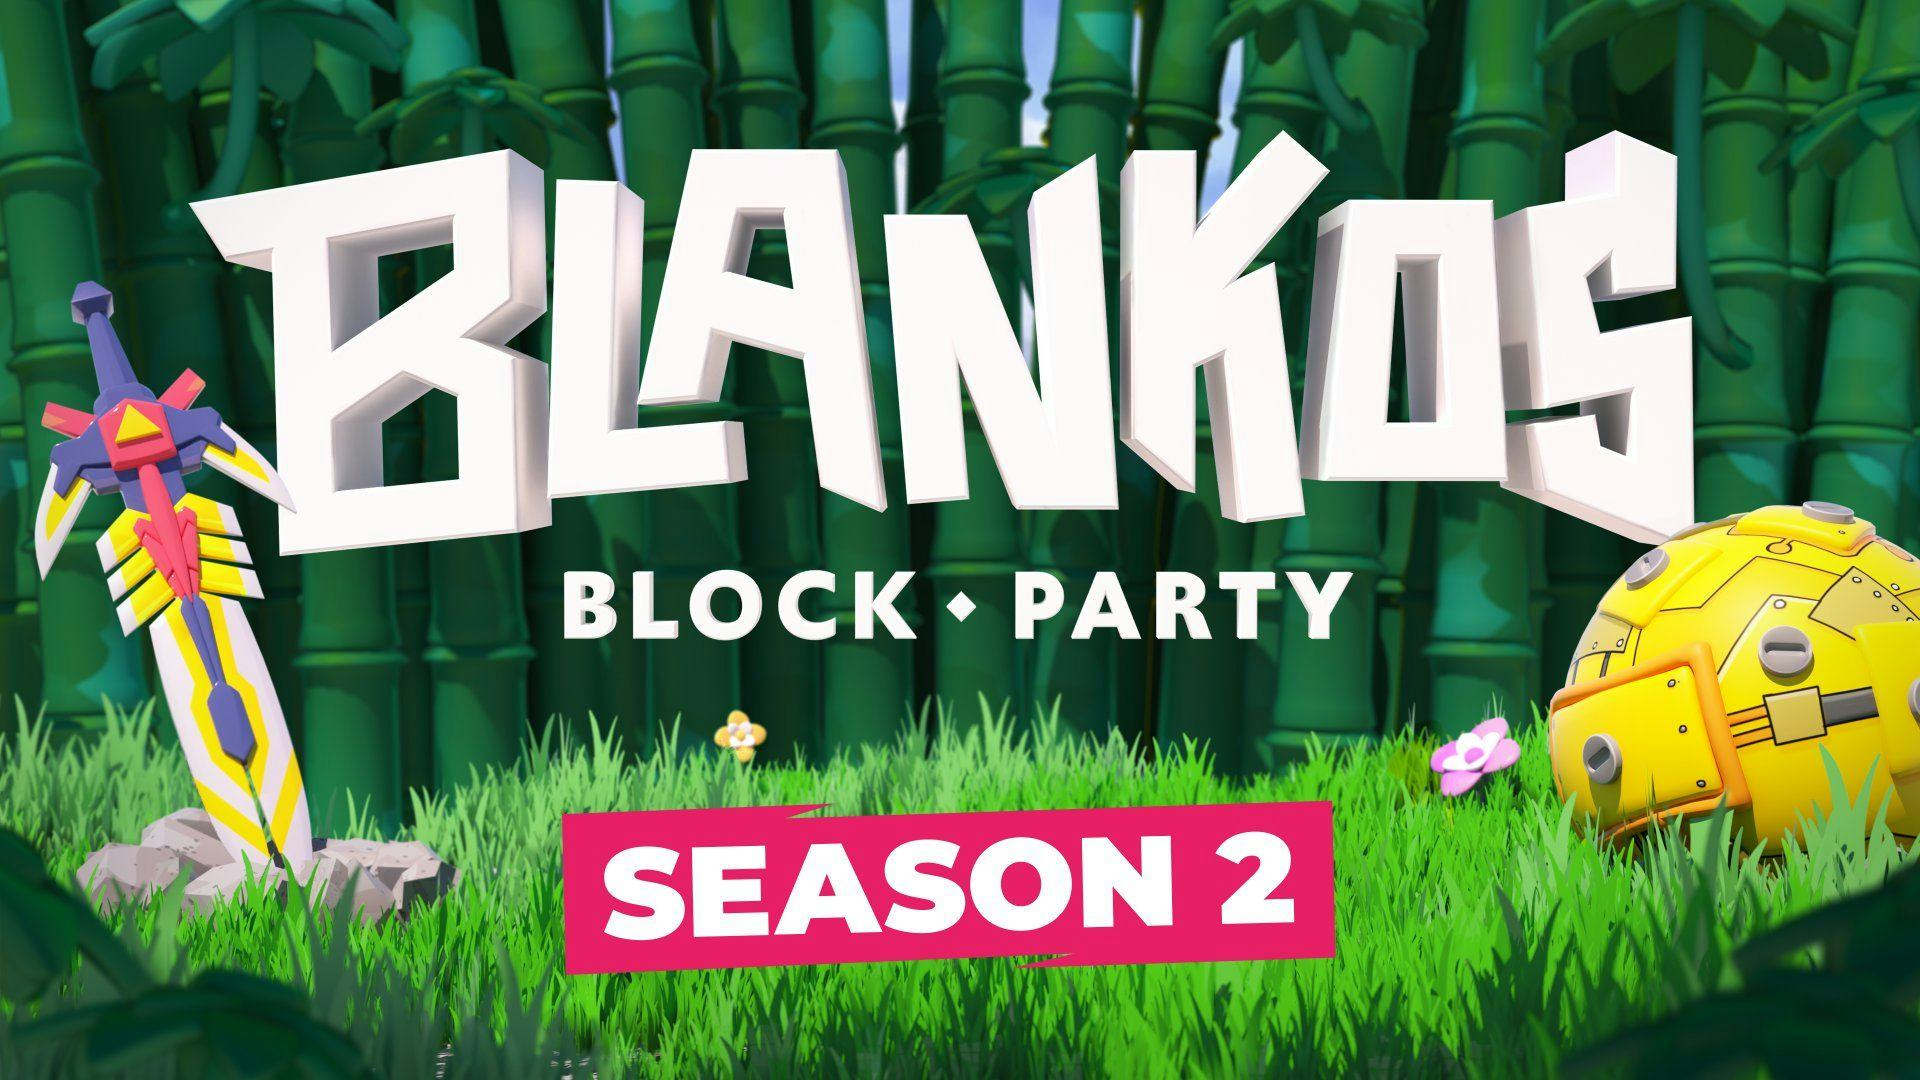 blankos block party season 2.jpg